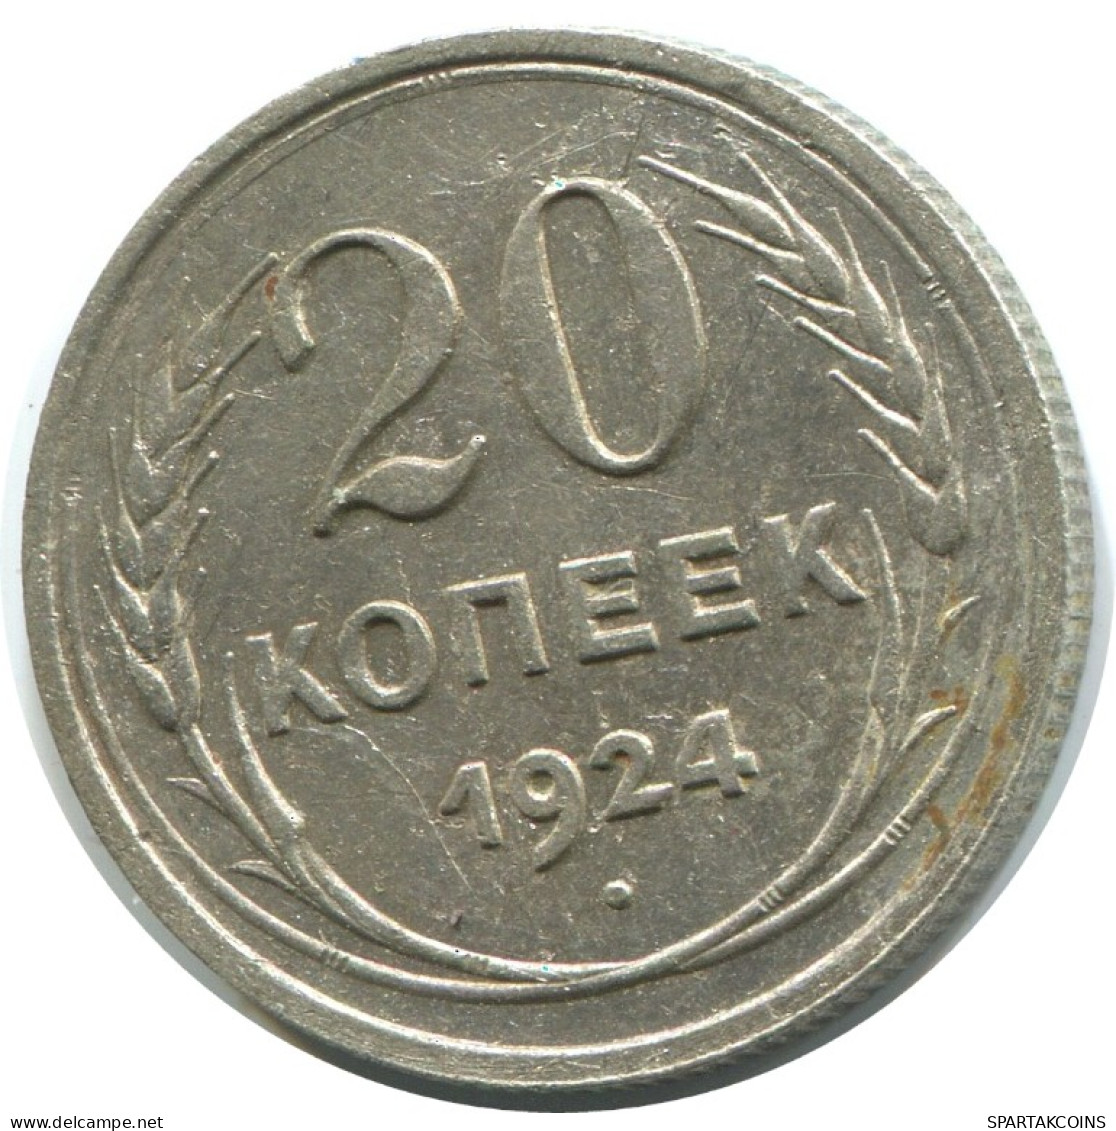 20 KOPEKS 1924 RUSIA RUSSIA USSR PLATA Moneda HIGH GRADE #AF279.4.E.A - Rusia